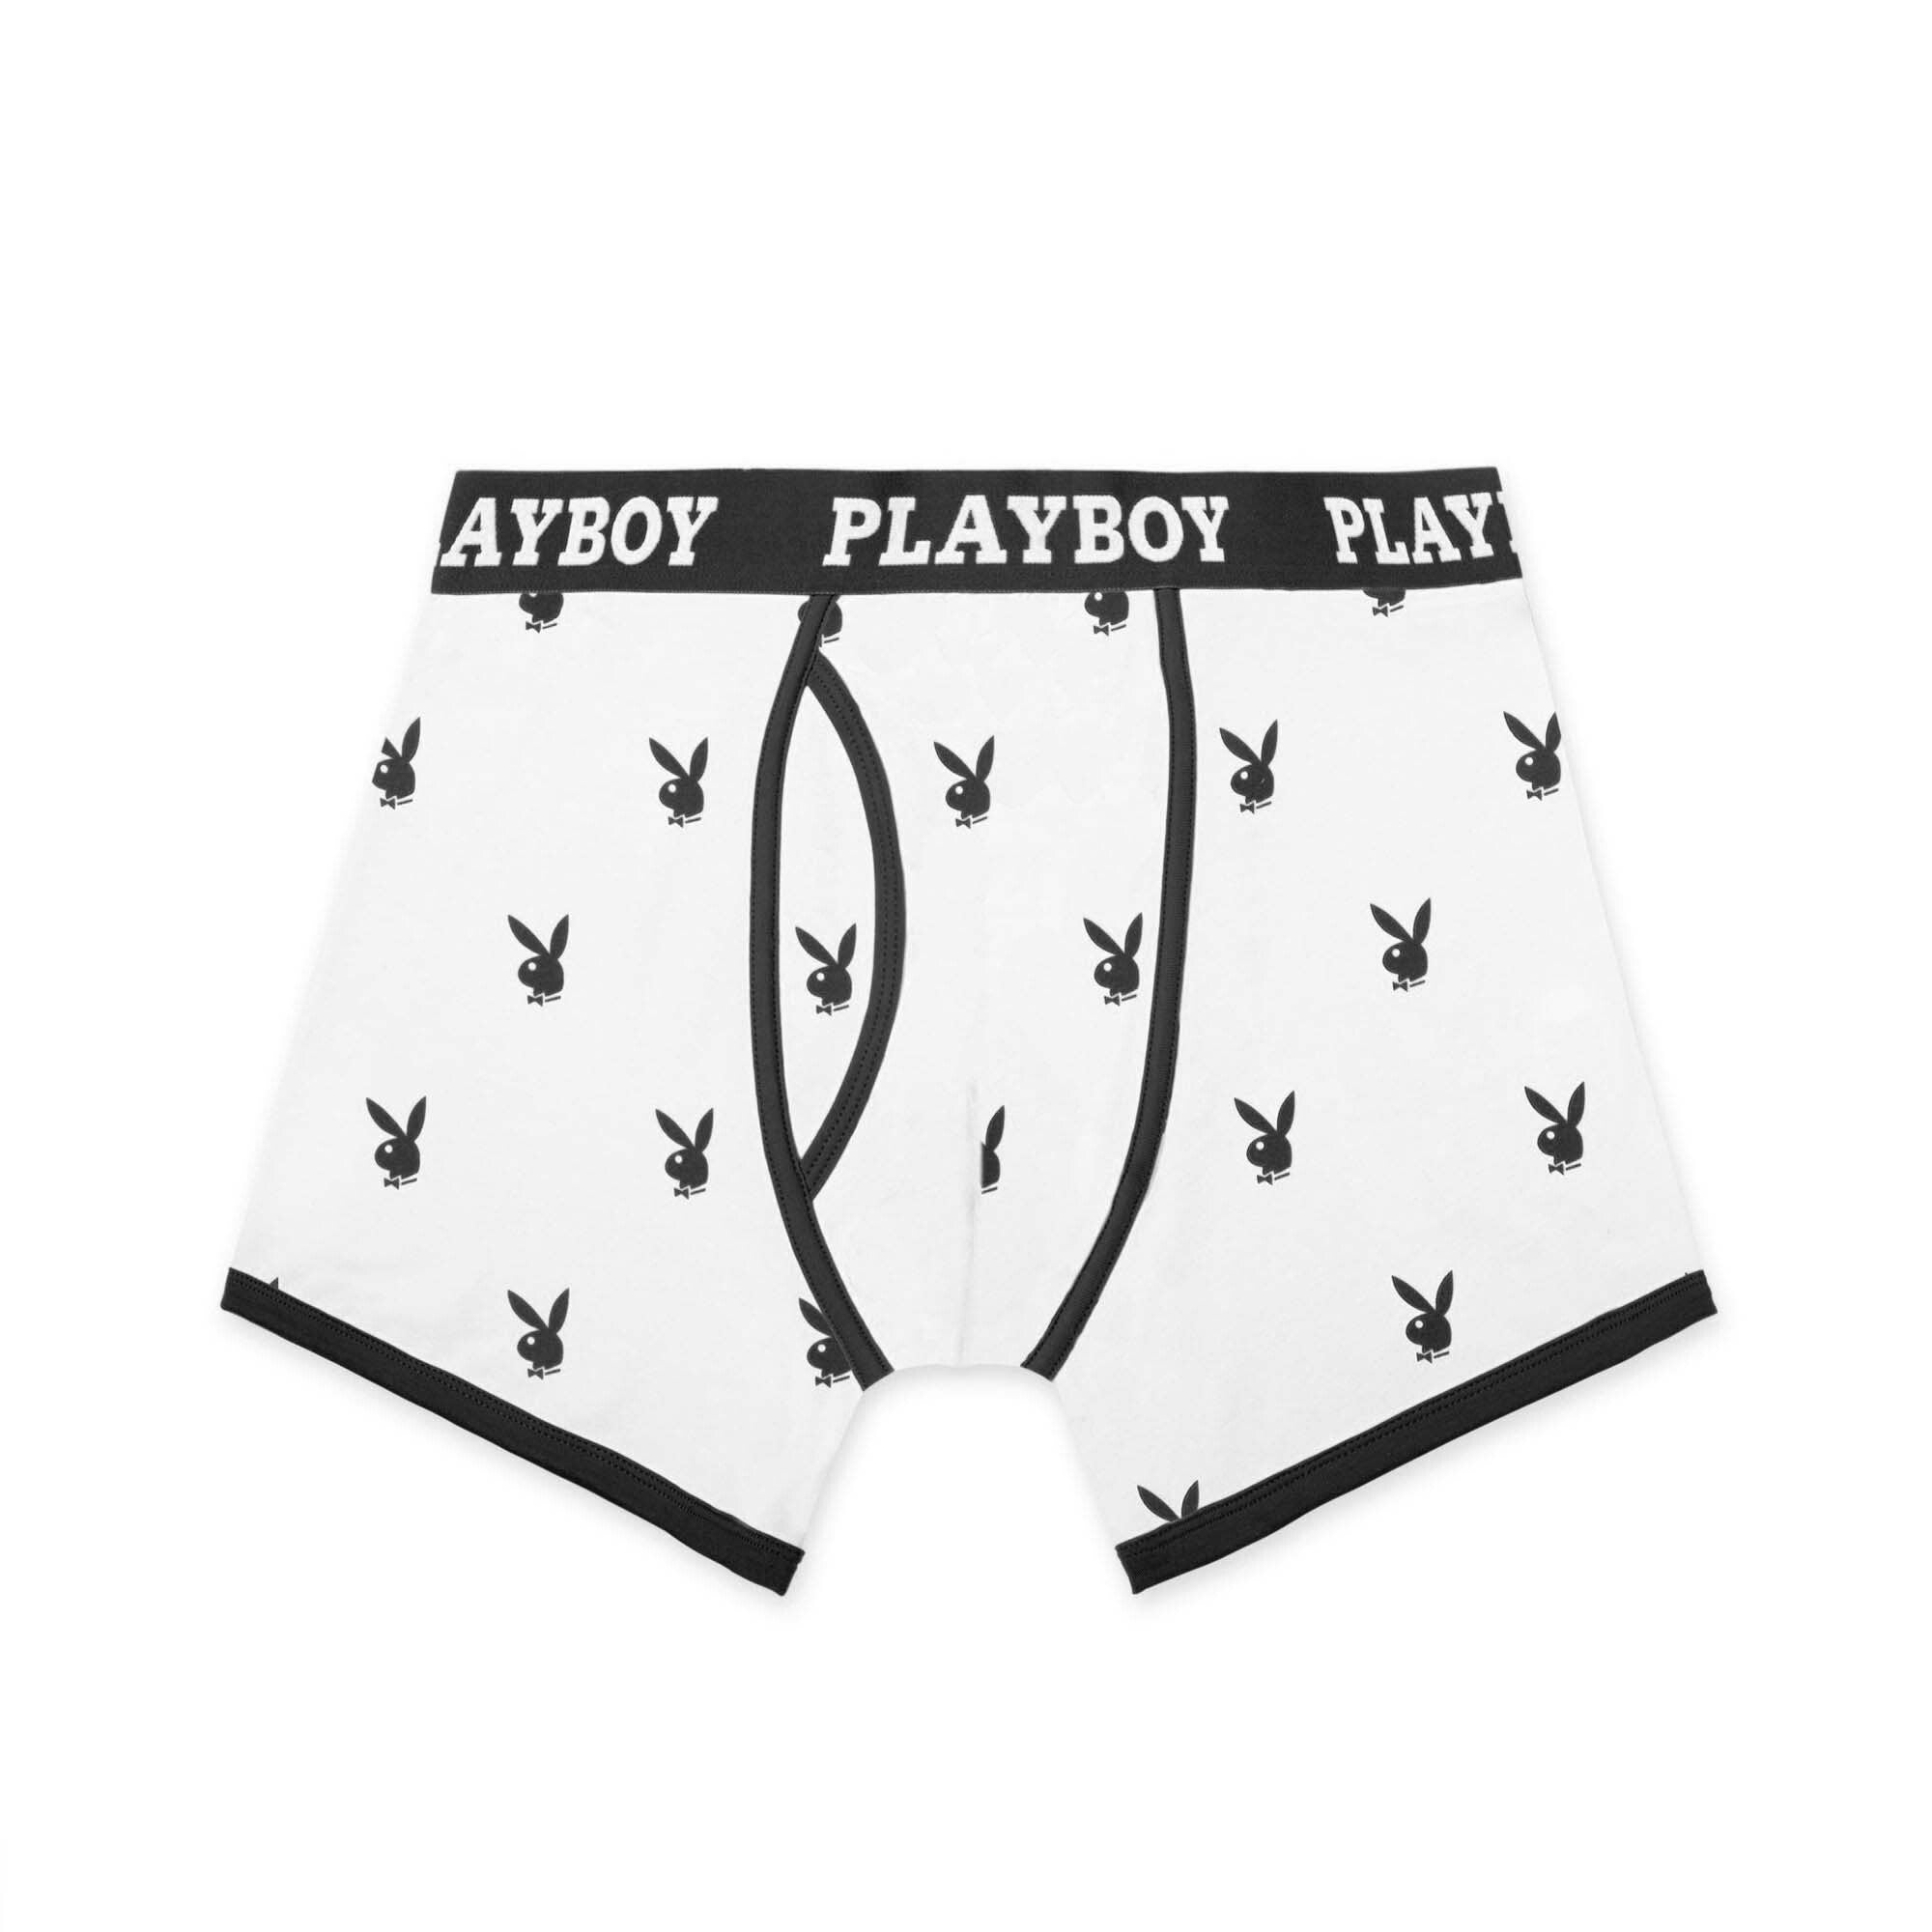 PLAYBOY, Underwear & Socks, 5pack Playboy Briefs